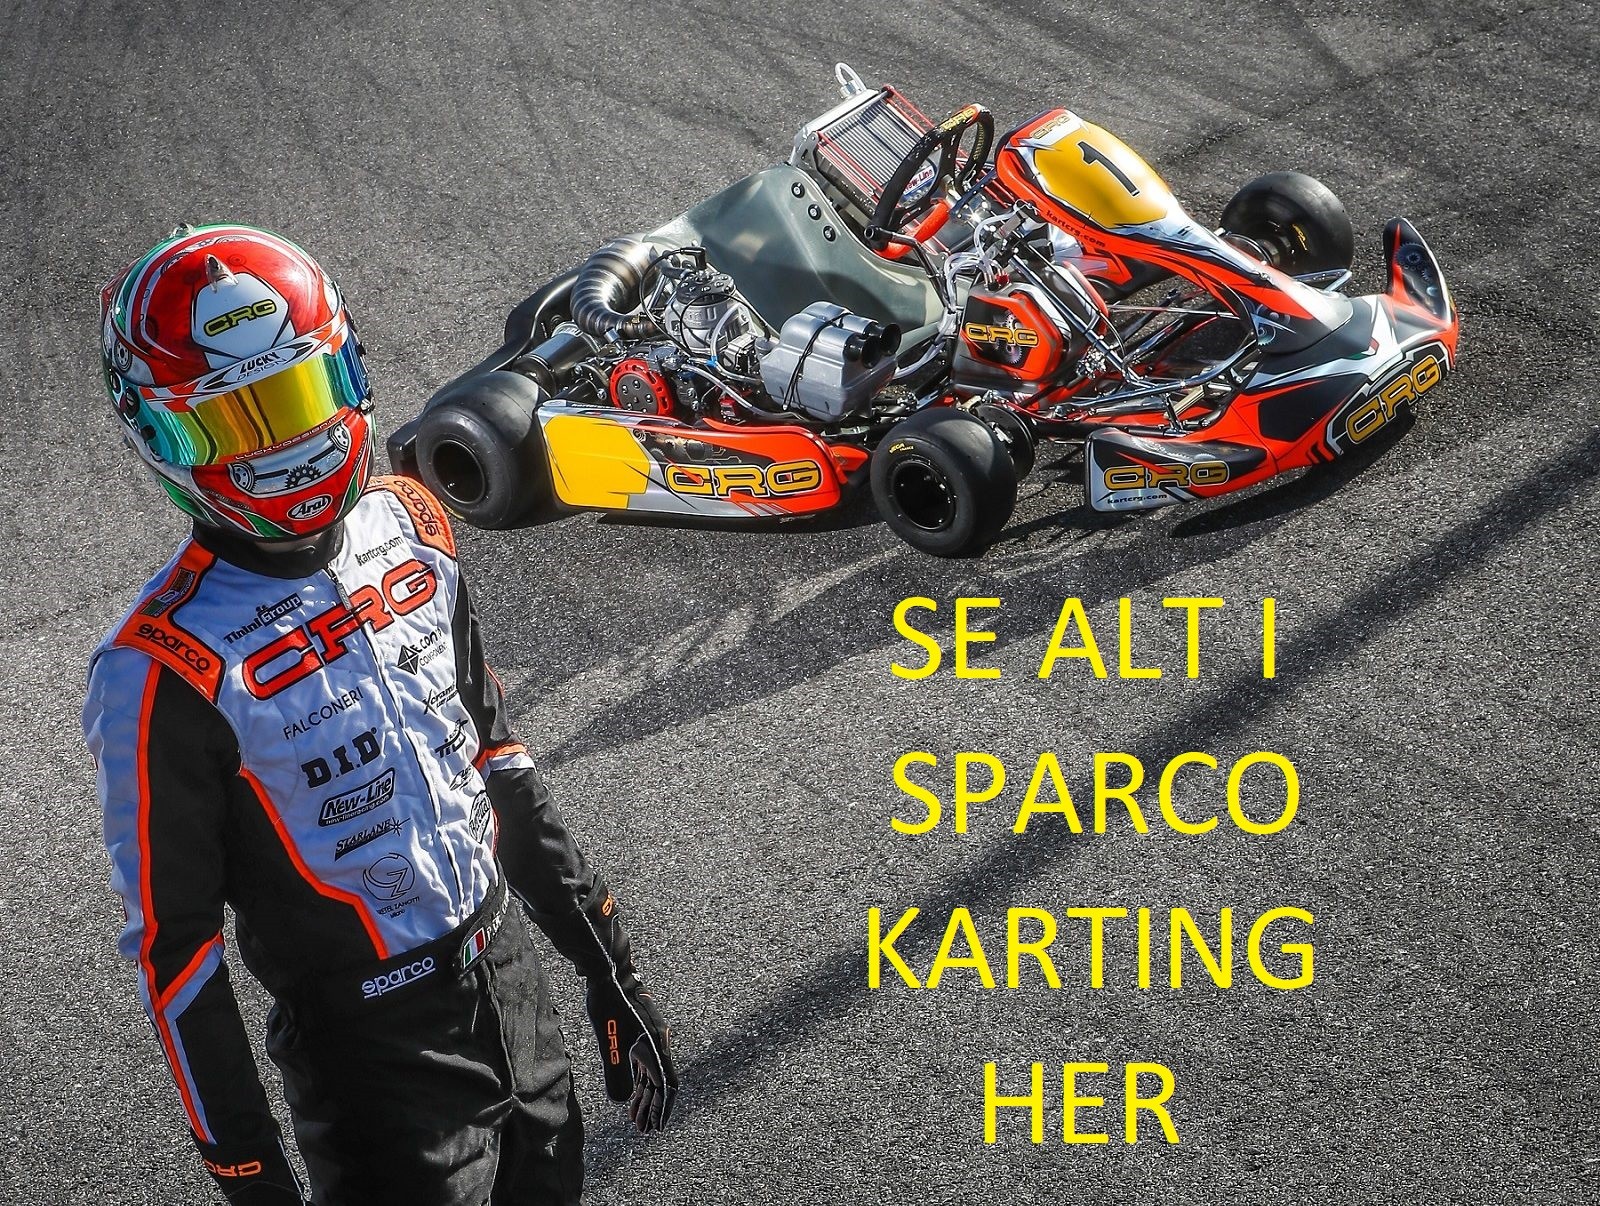 Sparco 2021 karting